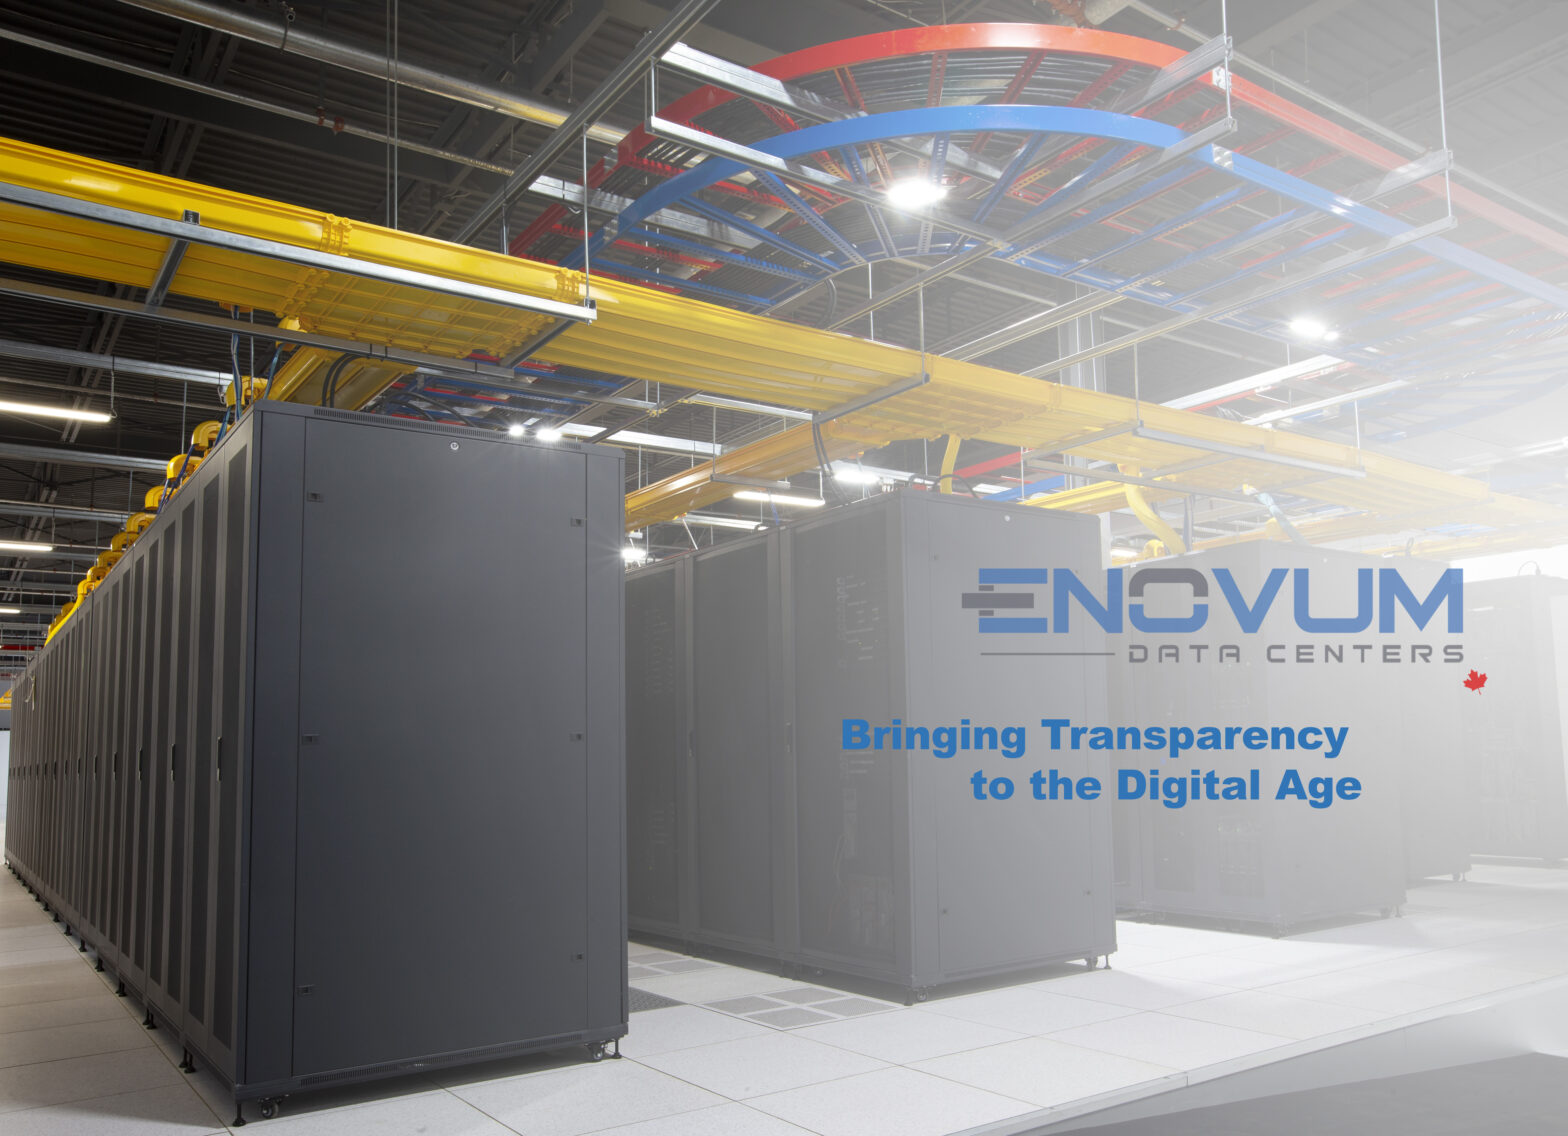 Enovum brings transparency to the digital age.